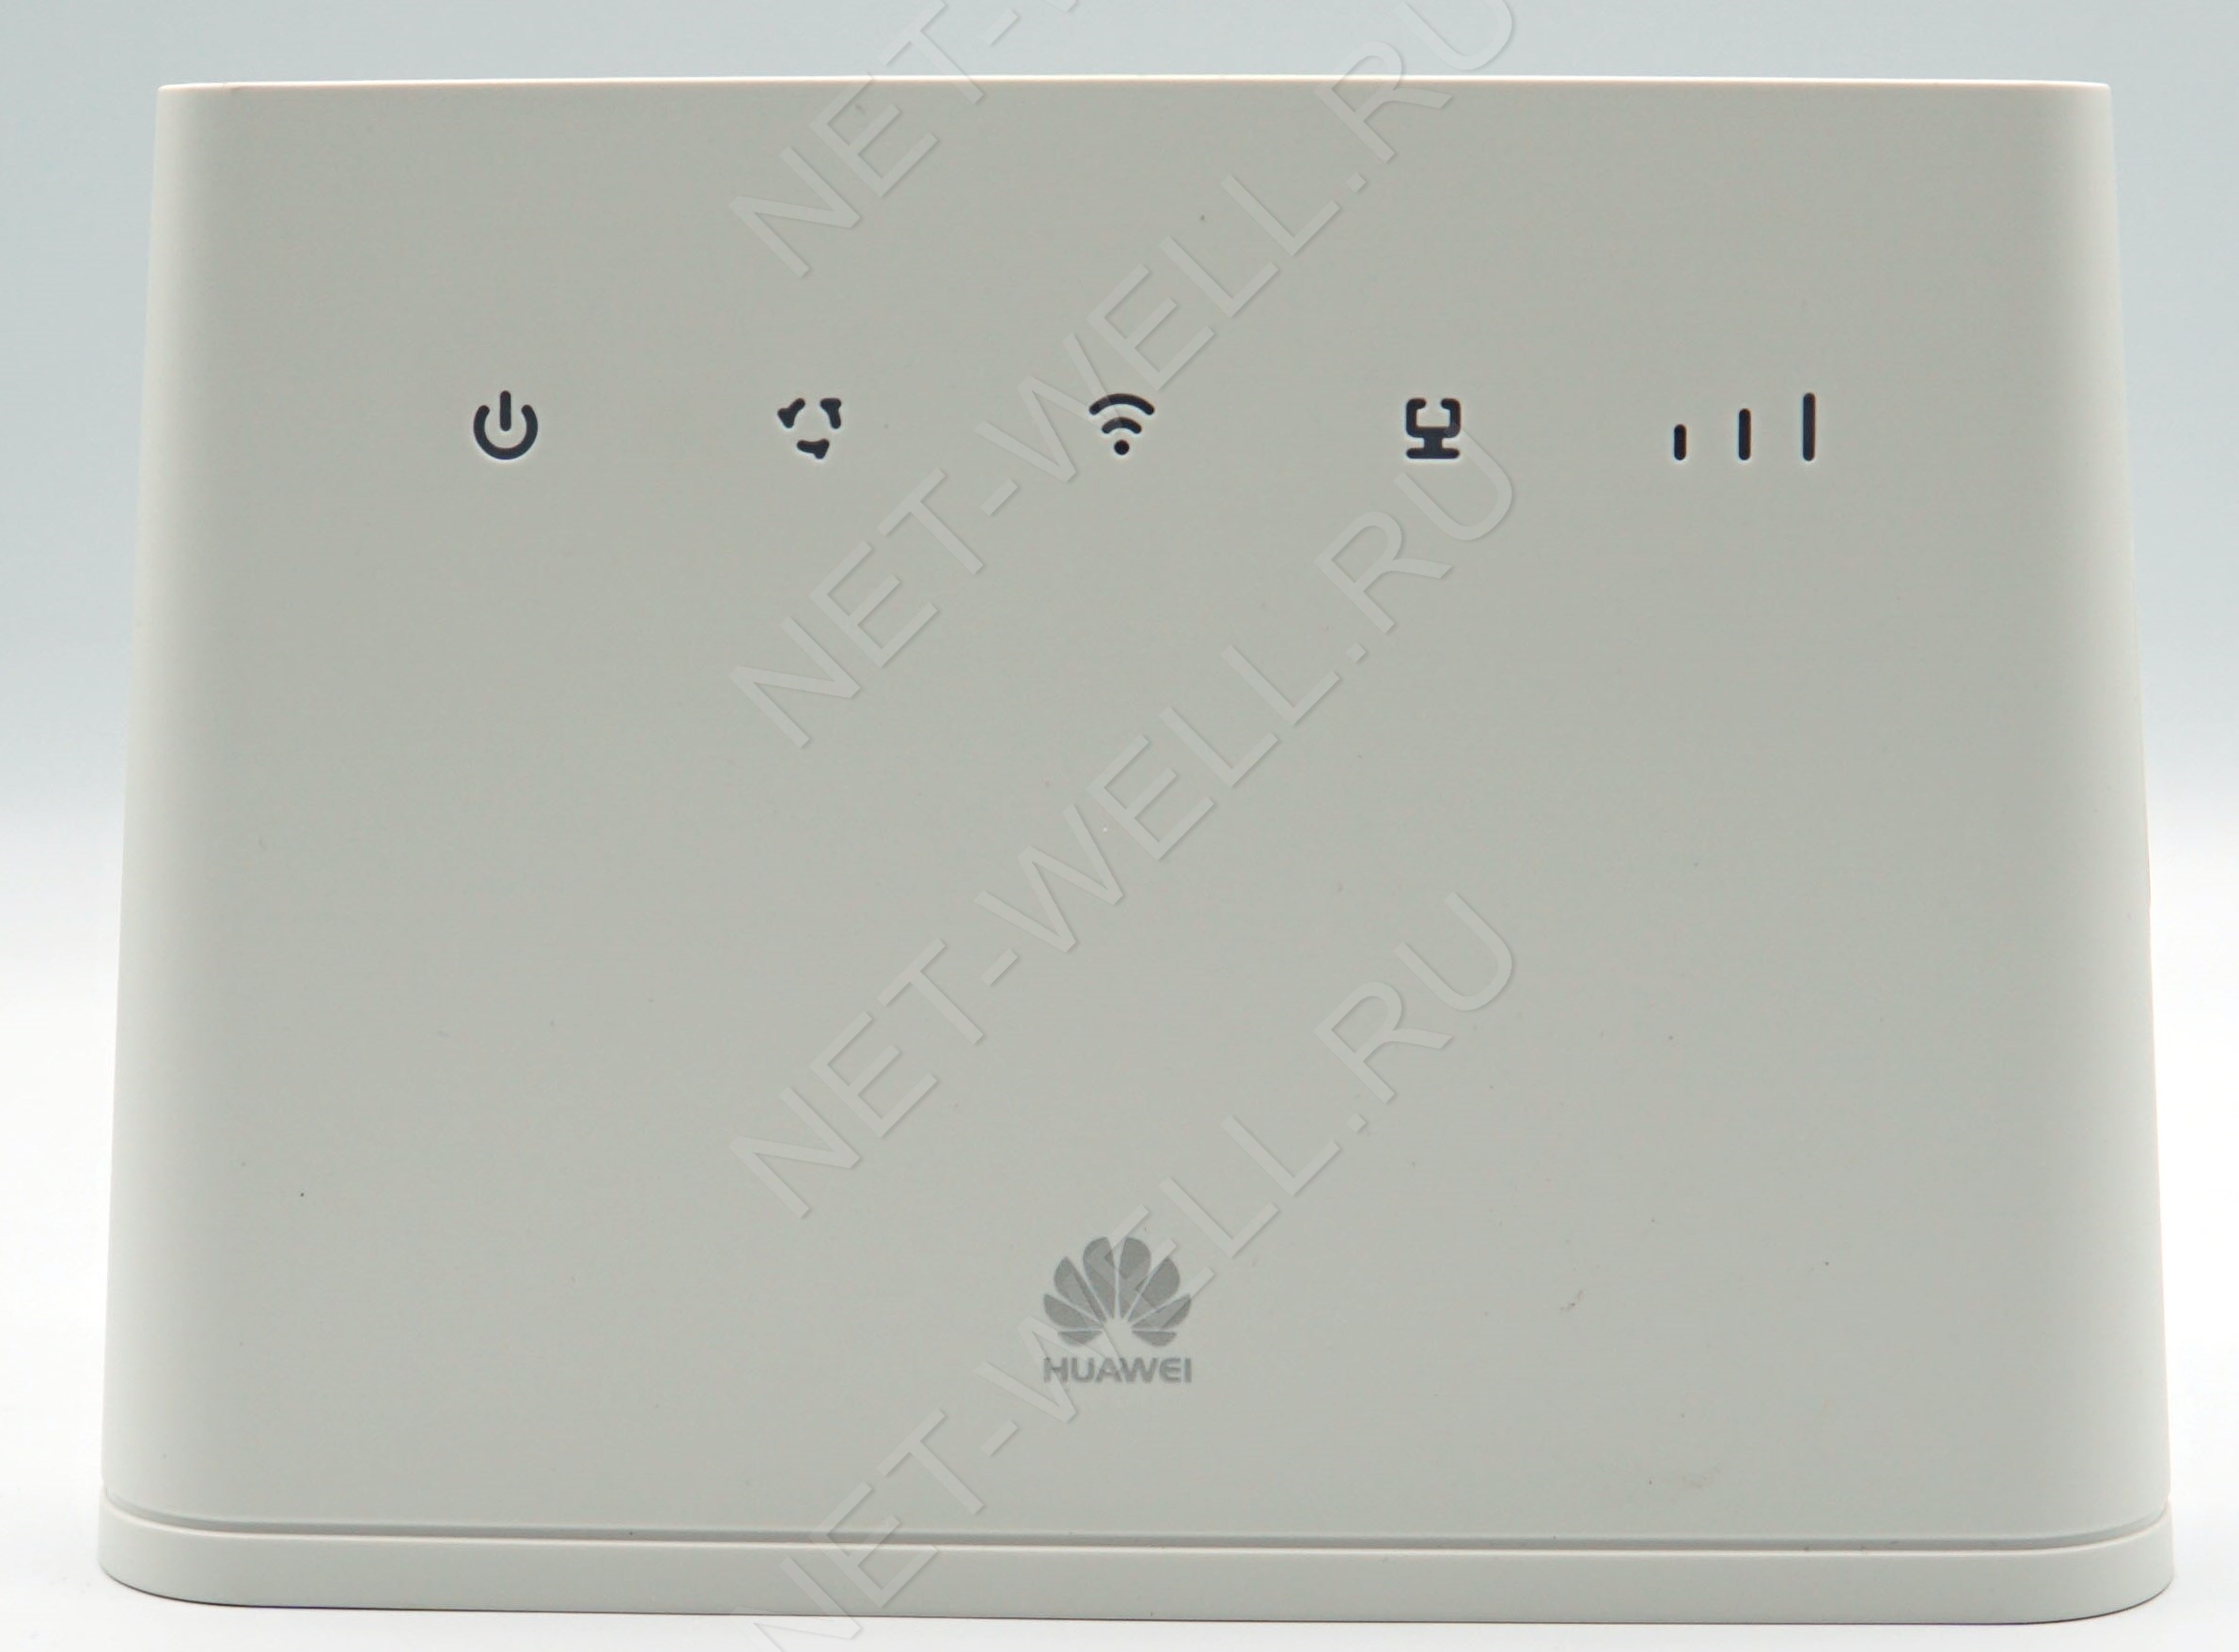 Huawei B311 вид спереди